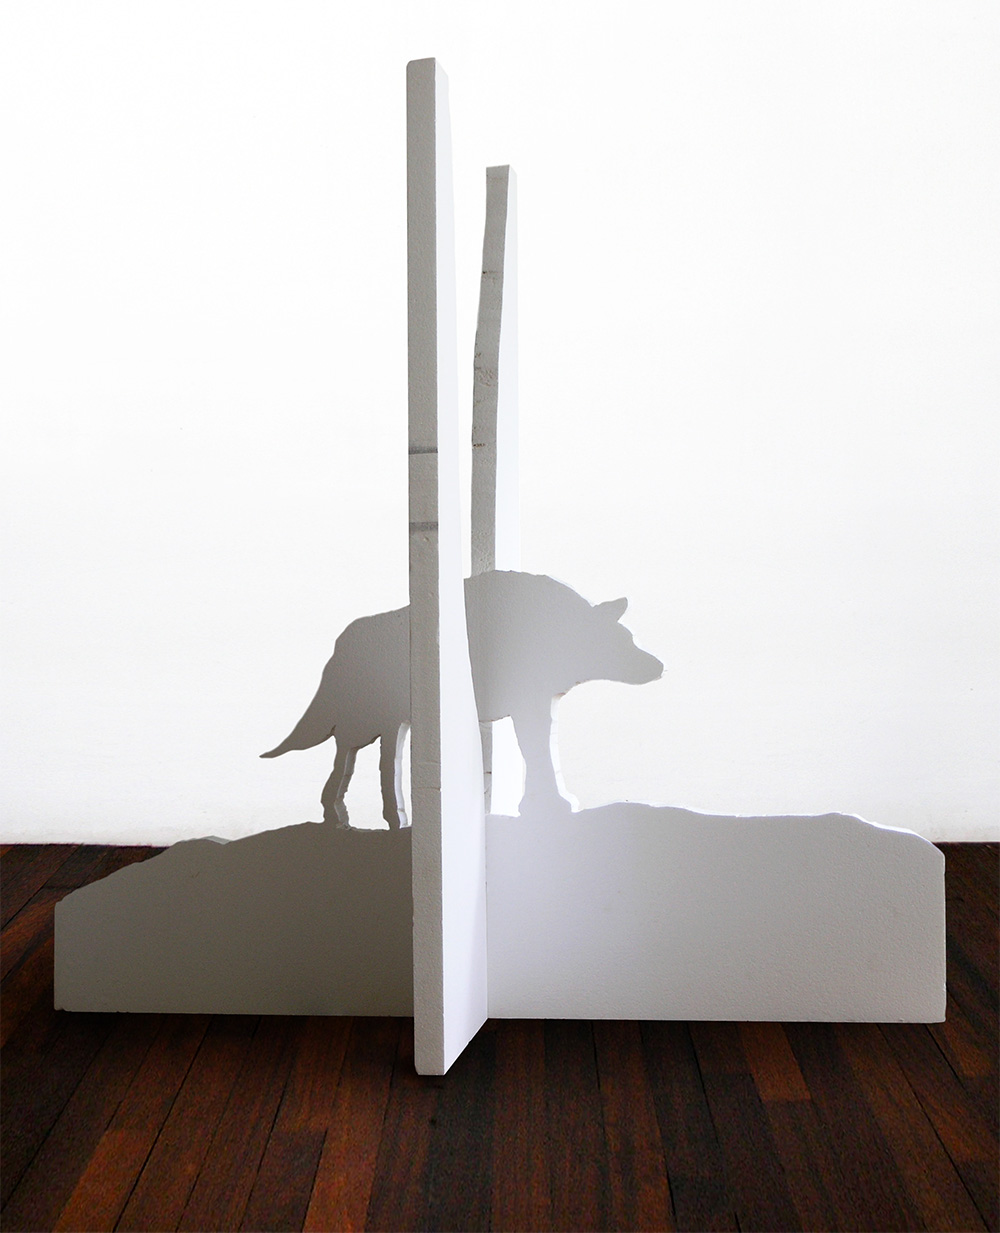 Wolves Pass, a sculpture by Guido Vrolix